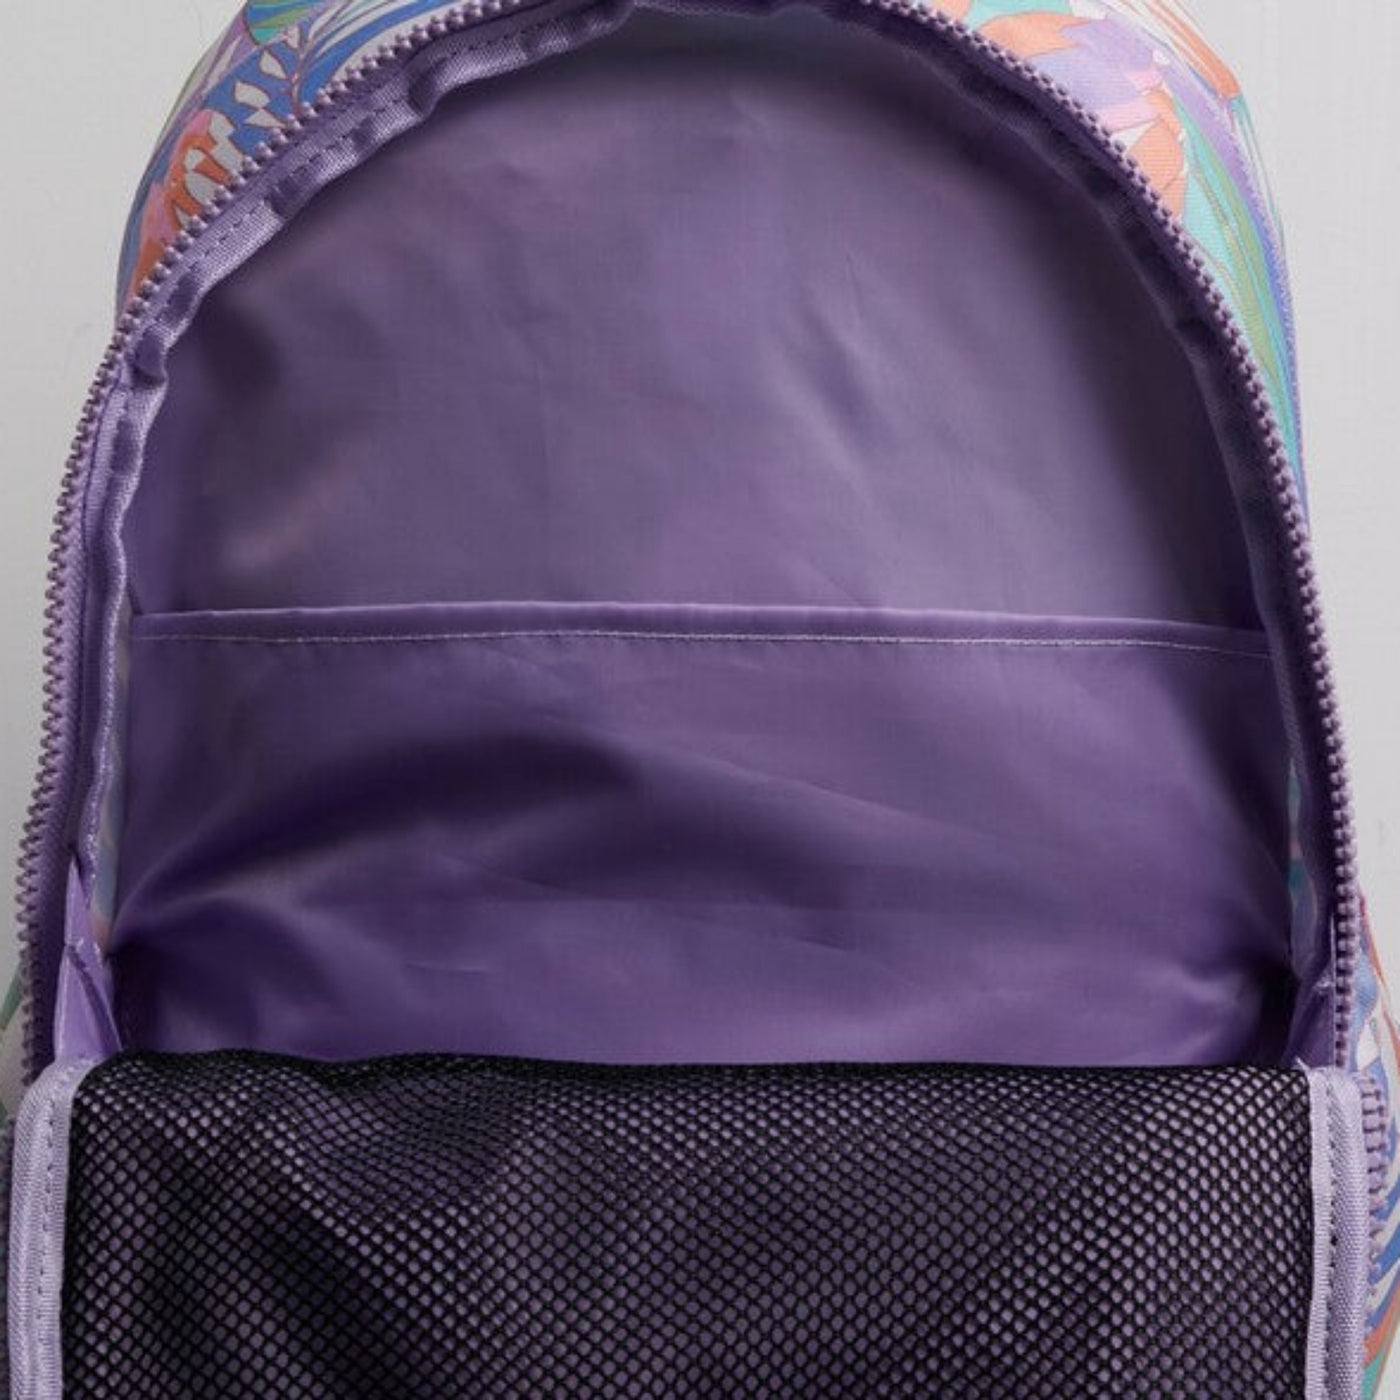 Billabong Tropical Dayz Roadie 31L Backpack - Multi Colour